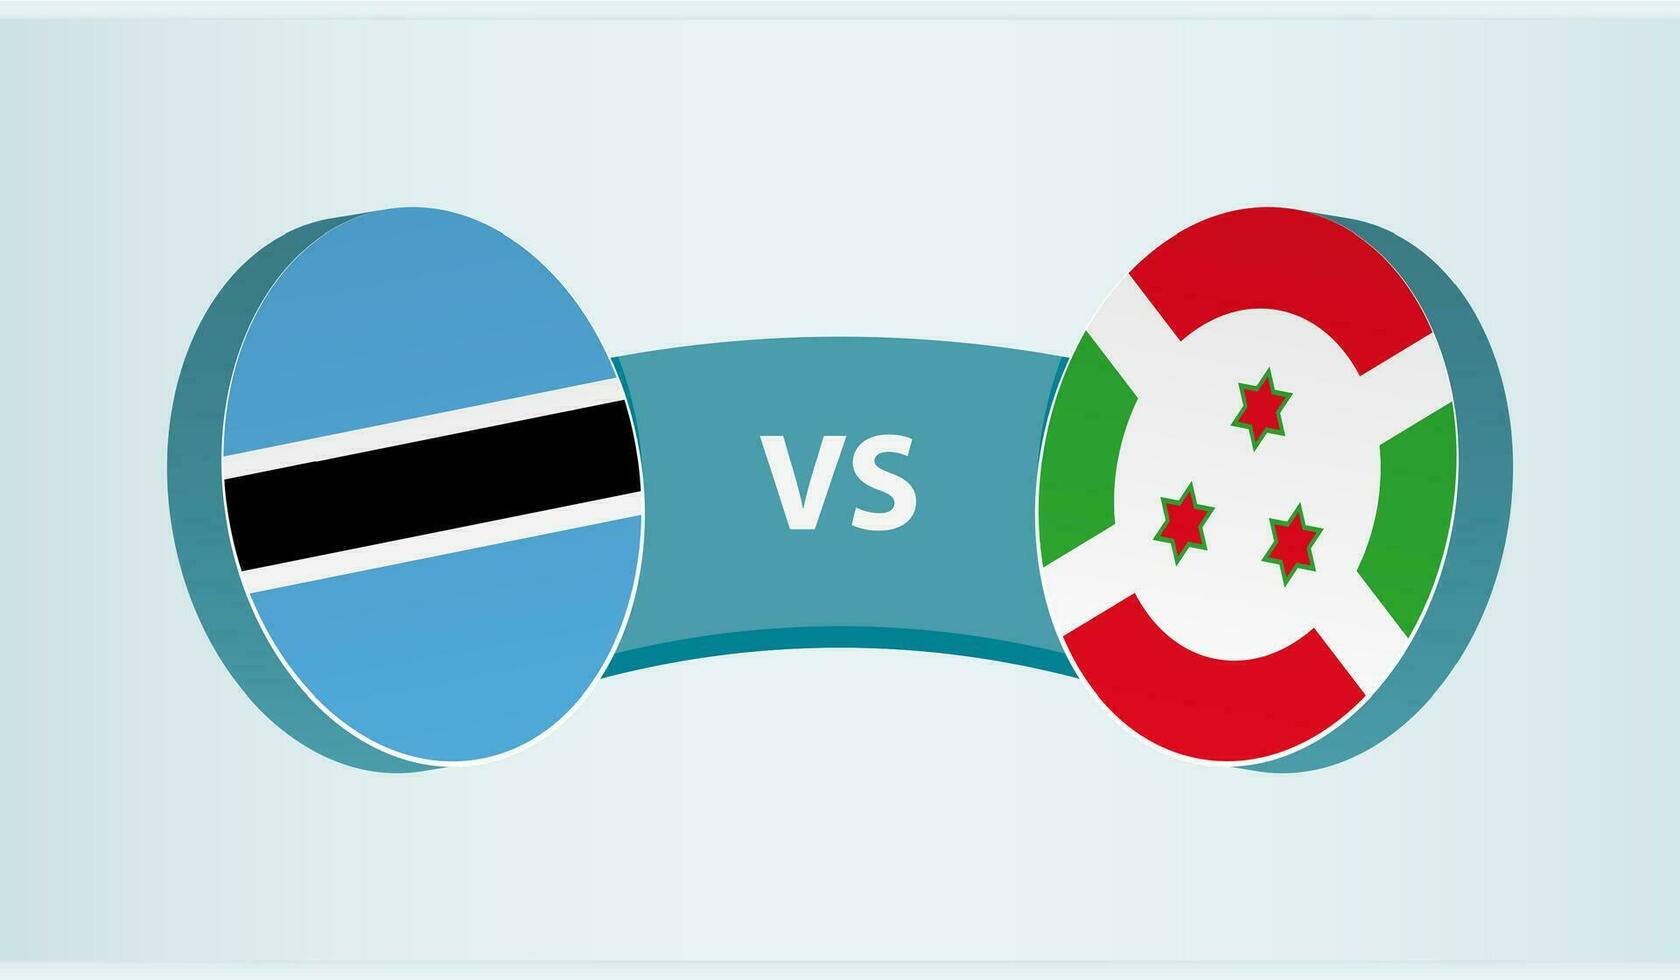 botsuana versus Burundi, equipe Esportes concorrência conceito. vetor